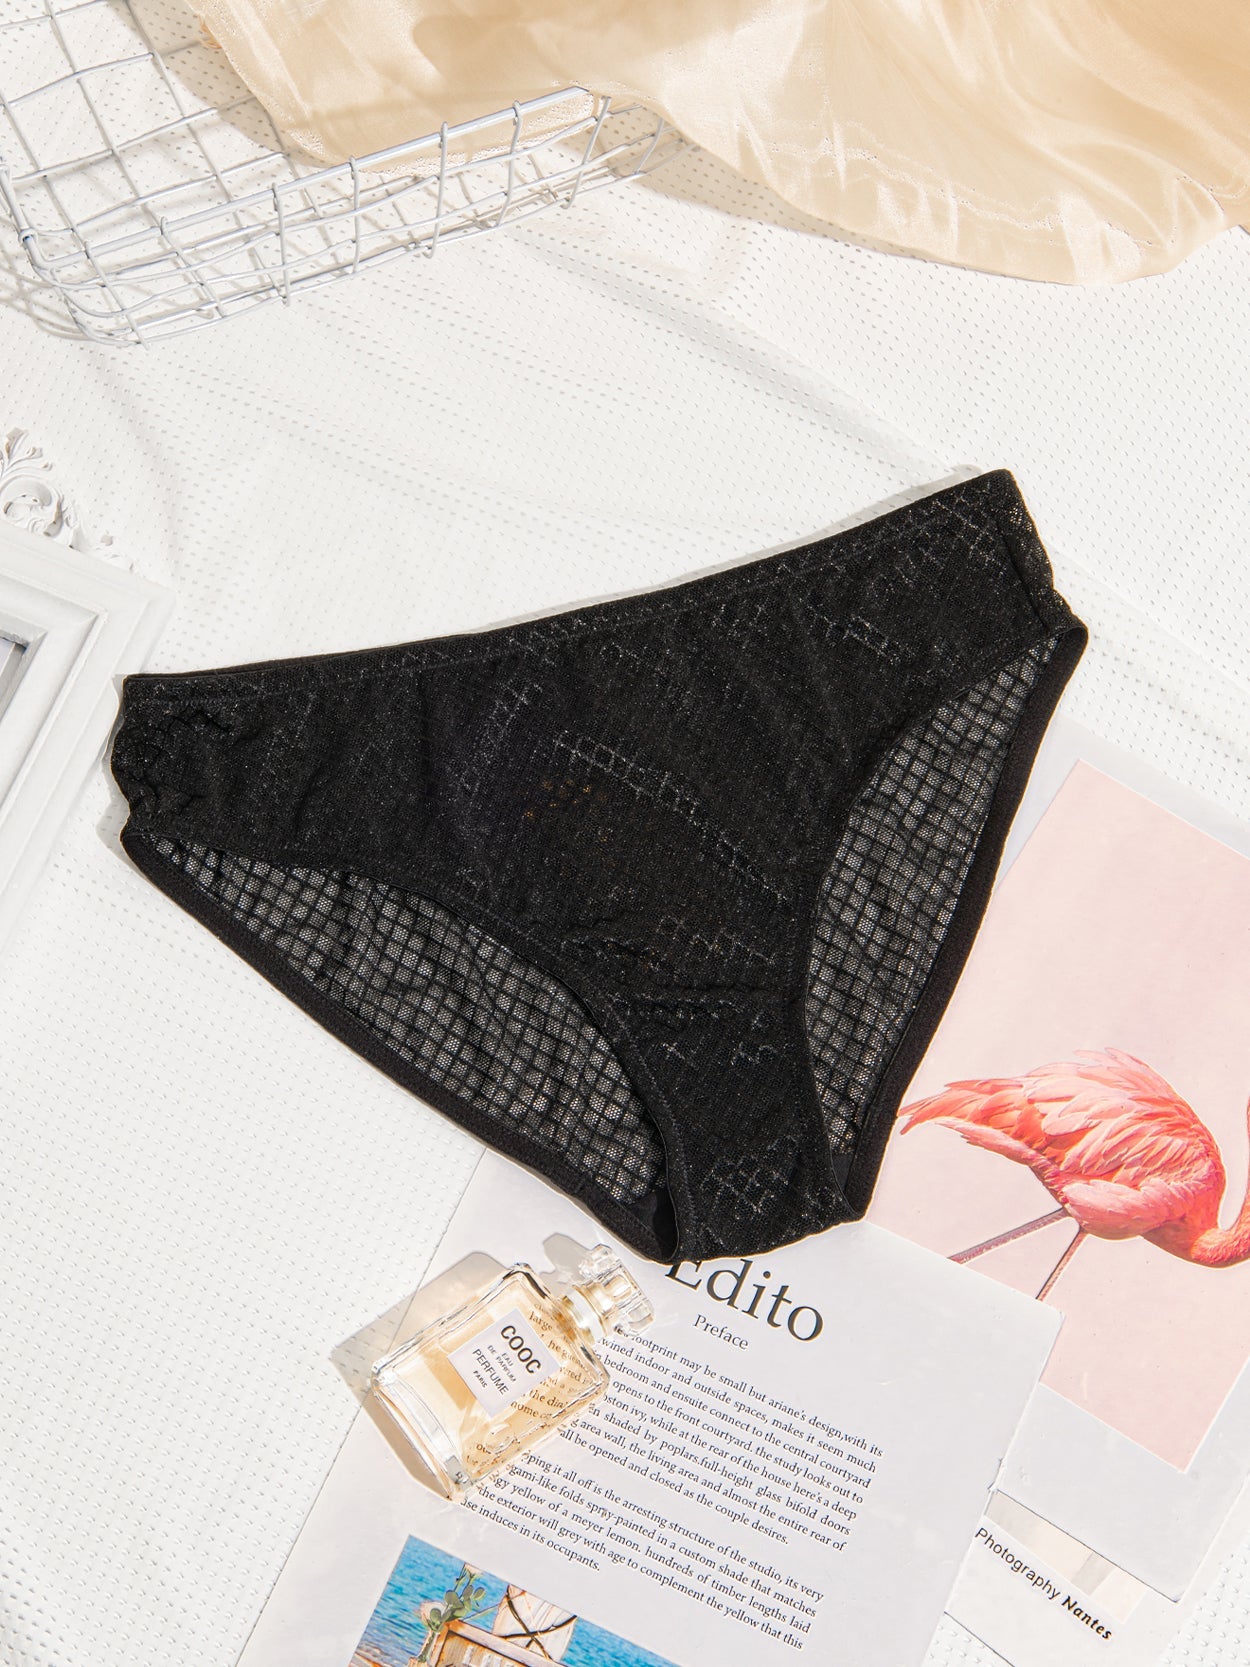 Women Lace 4 Pack Panties Bikini Underwear Comfort Brief Plus Size –  WingsLove